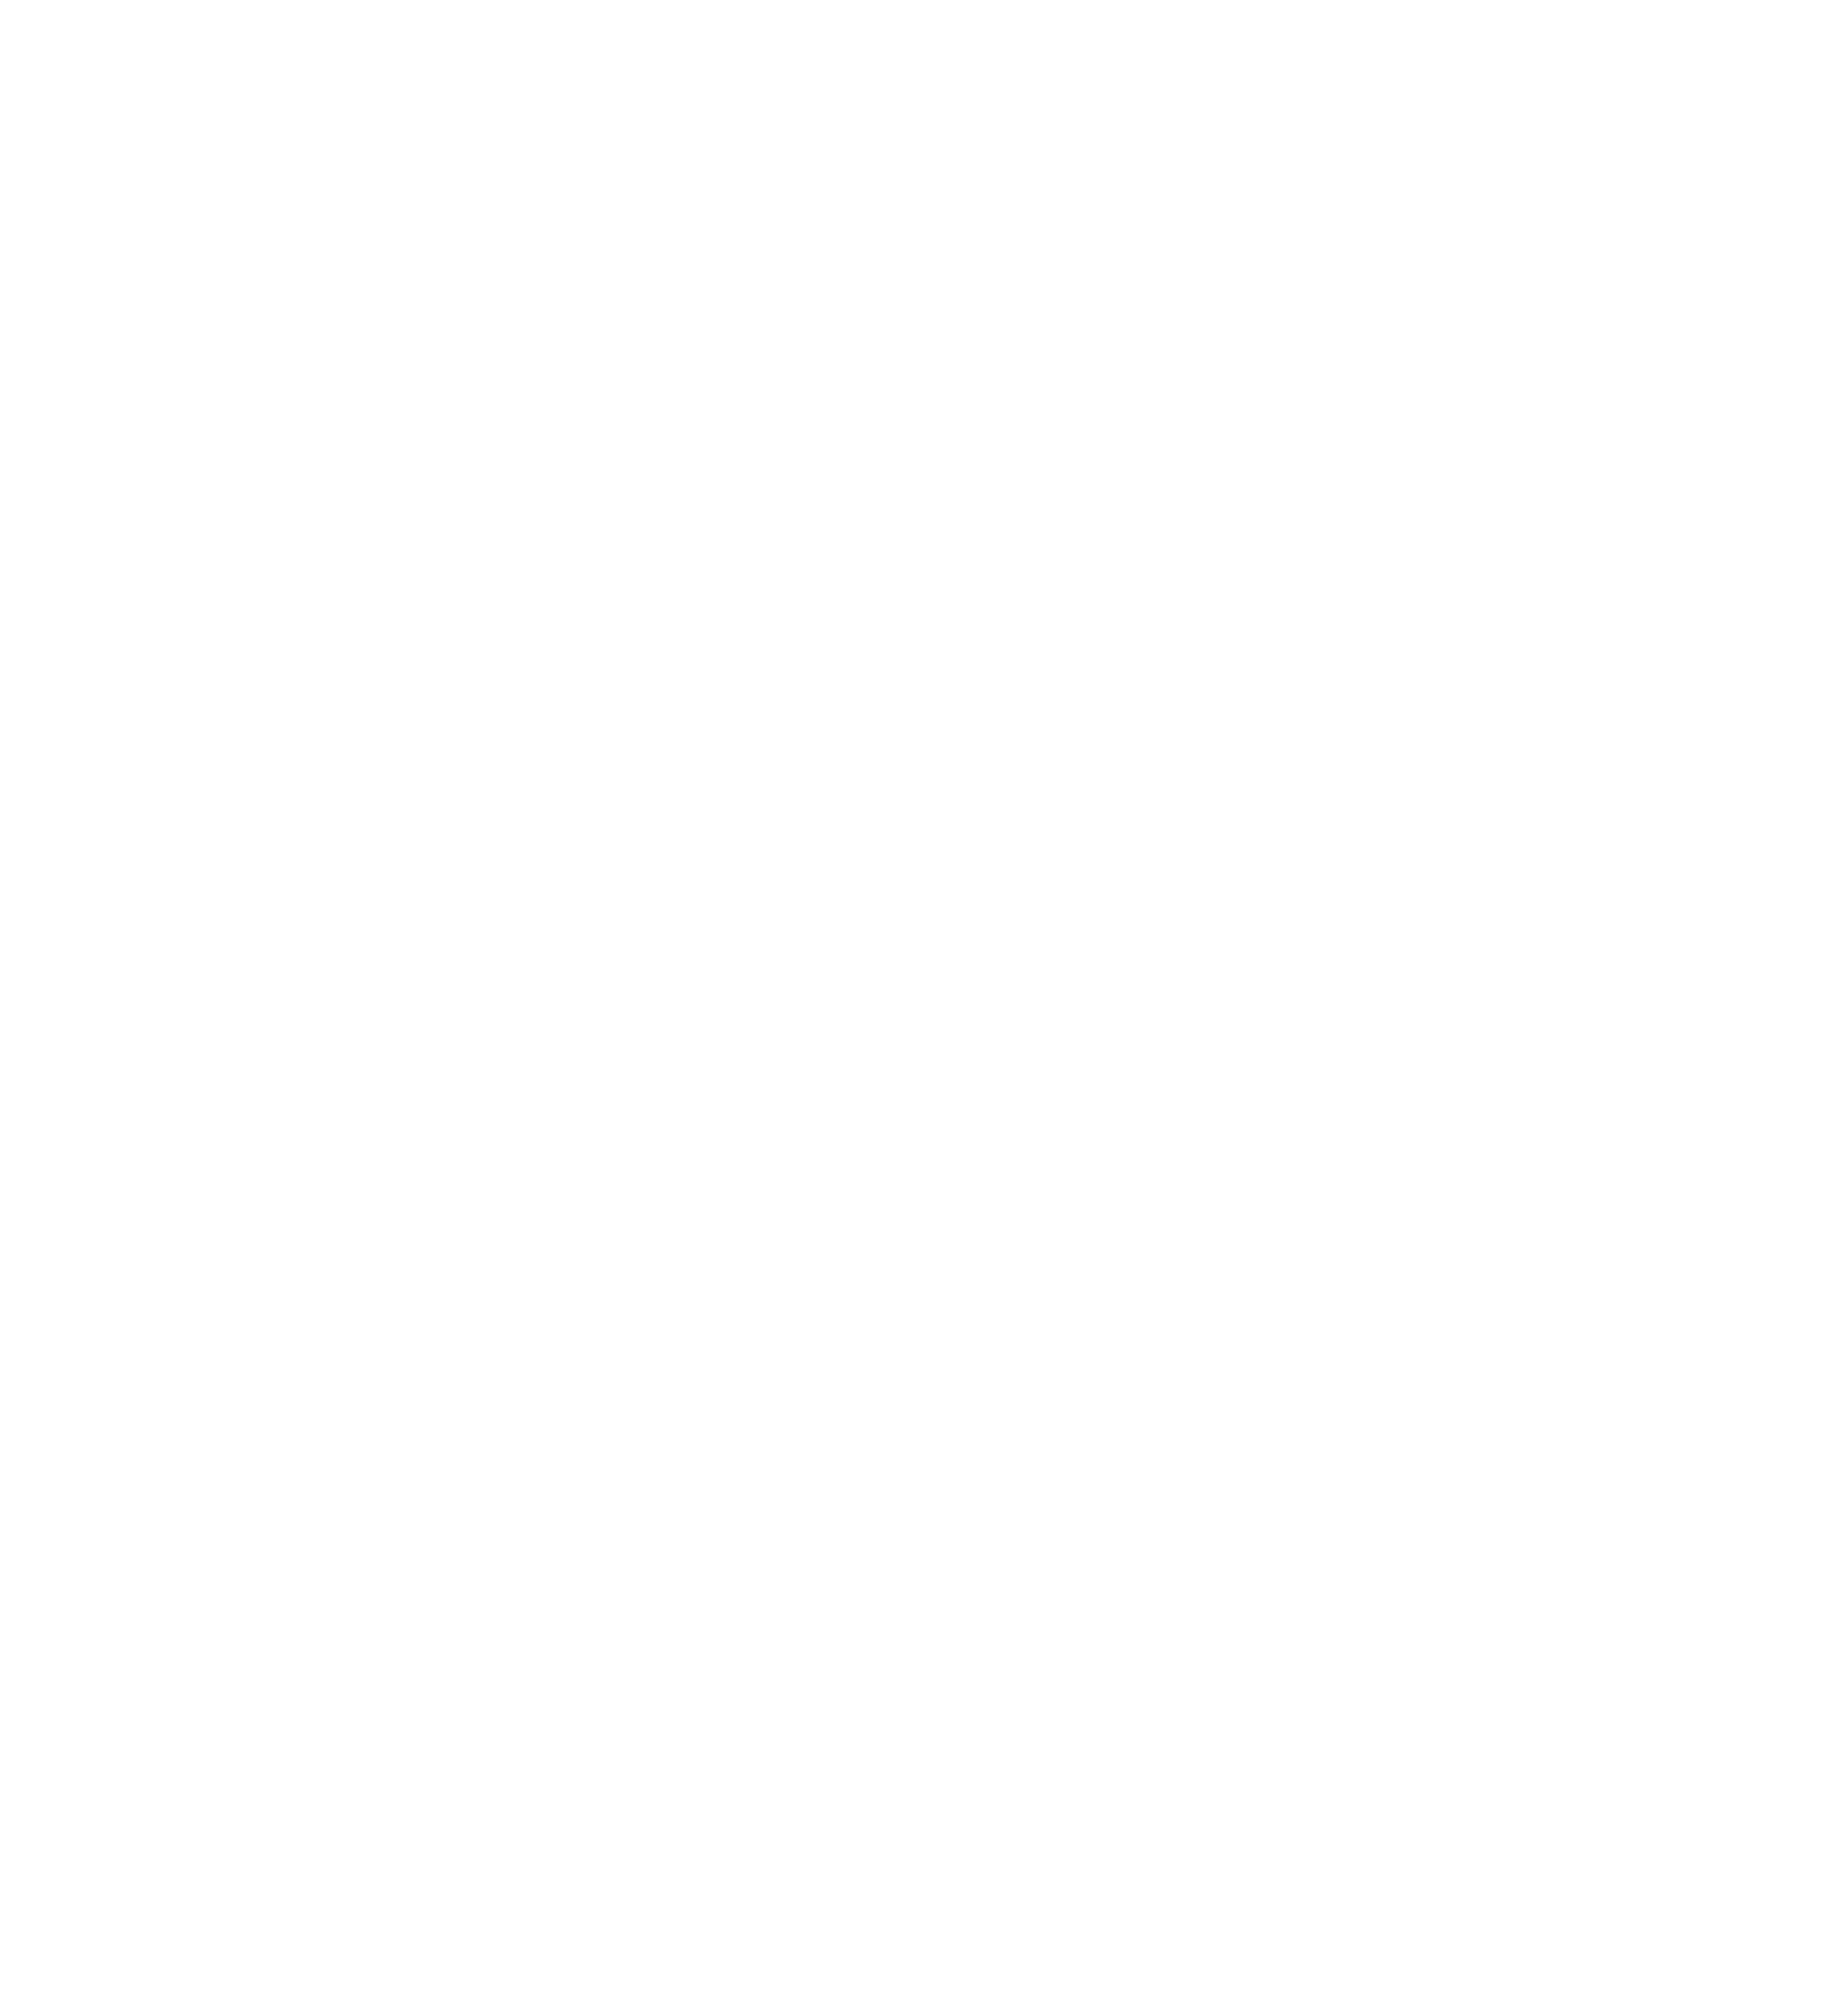 Link to neighborhood info for Casa del Rio in Peoria, Arizona